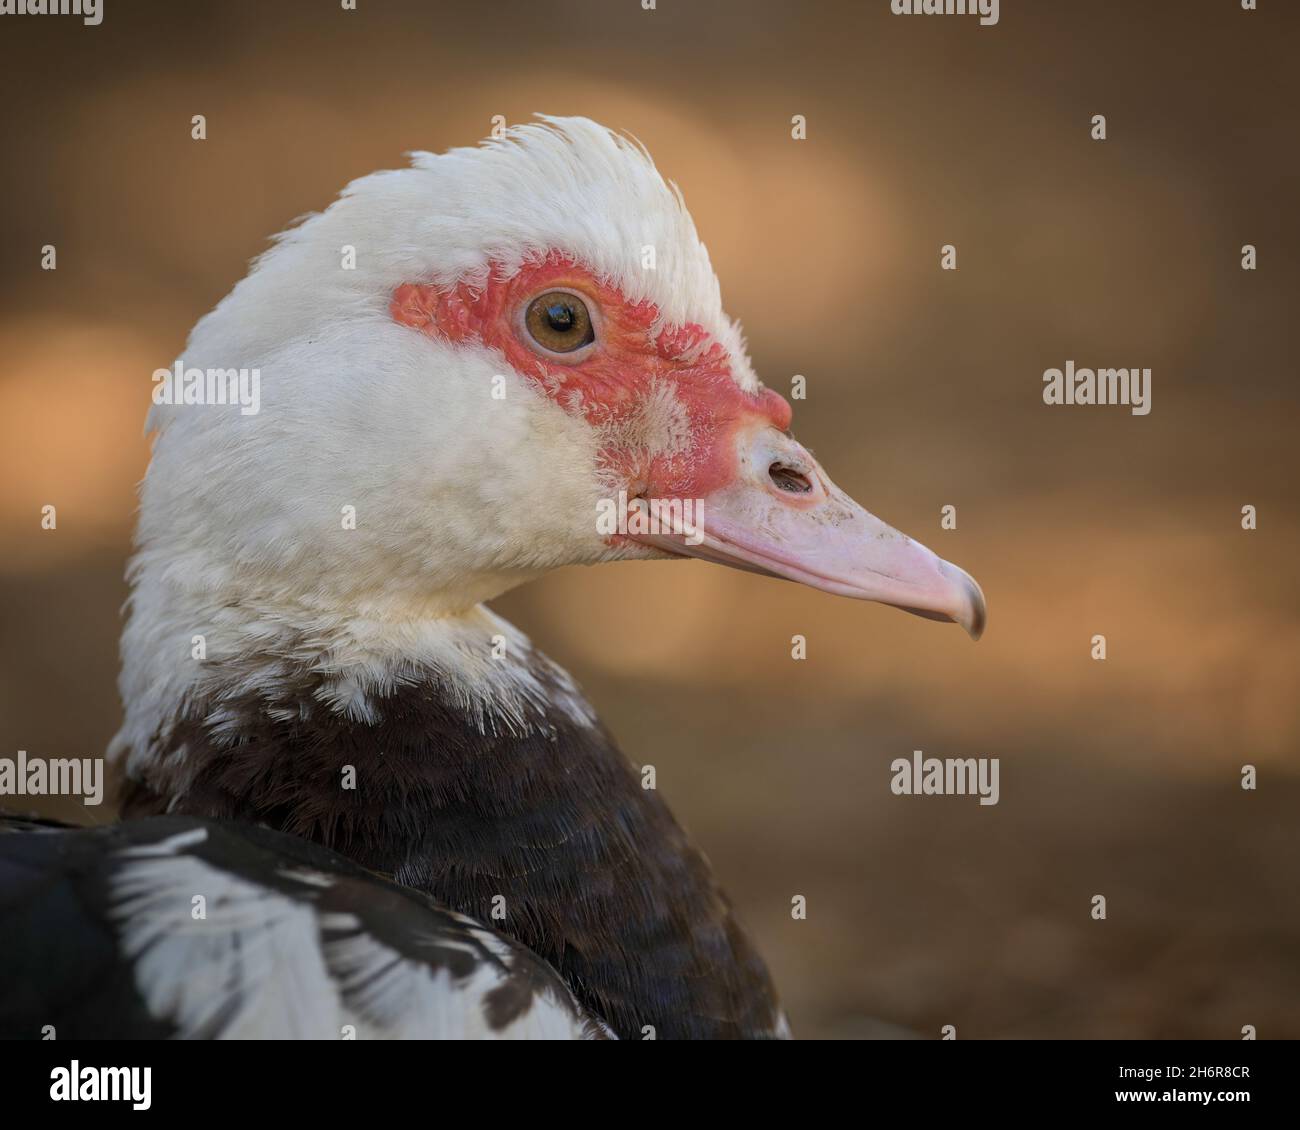 Muscovy closeup profile duck portrait Stock Photo